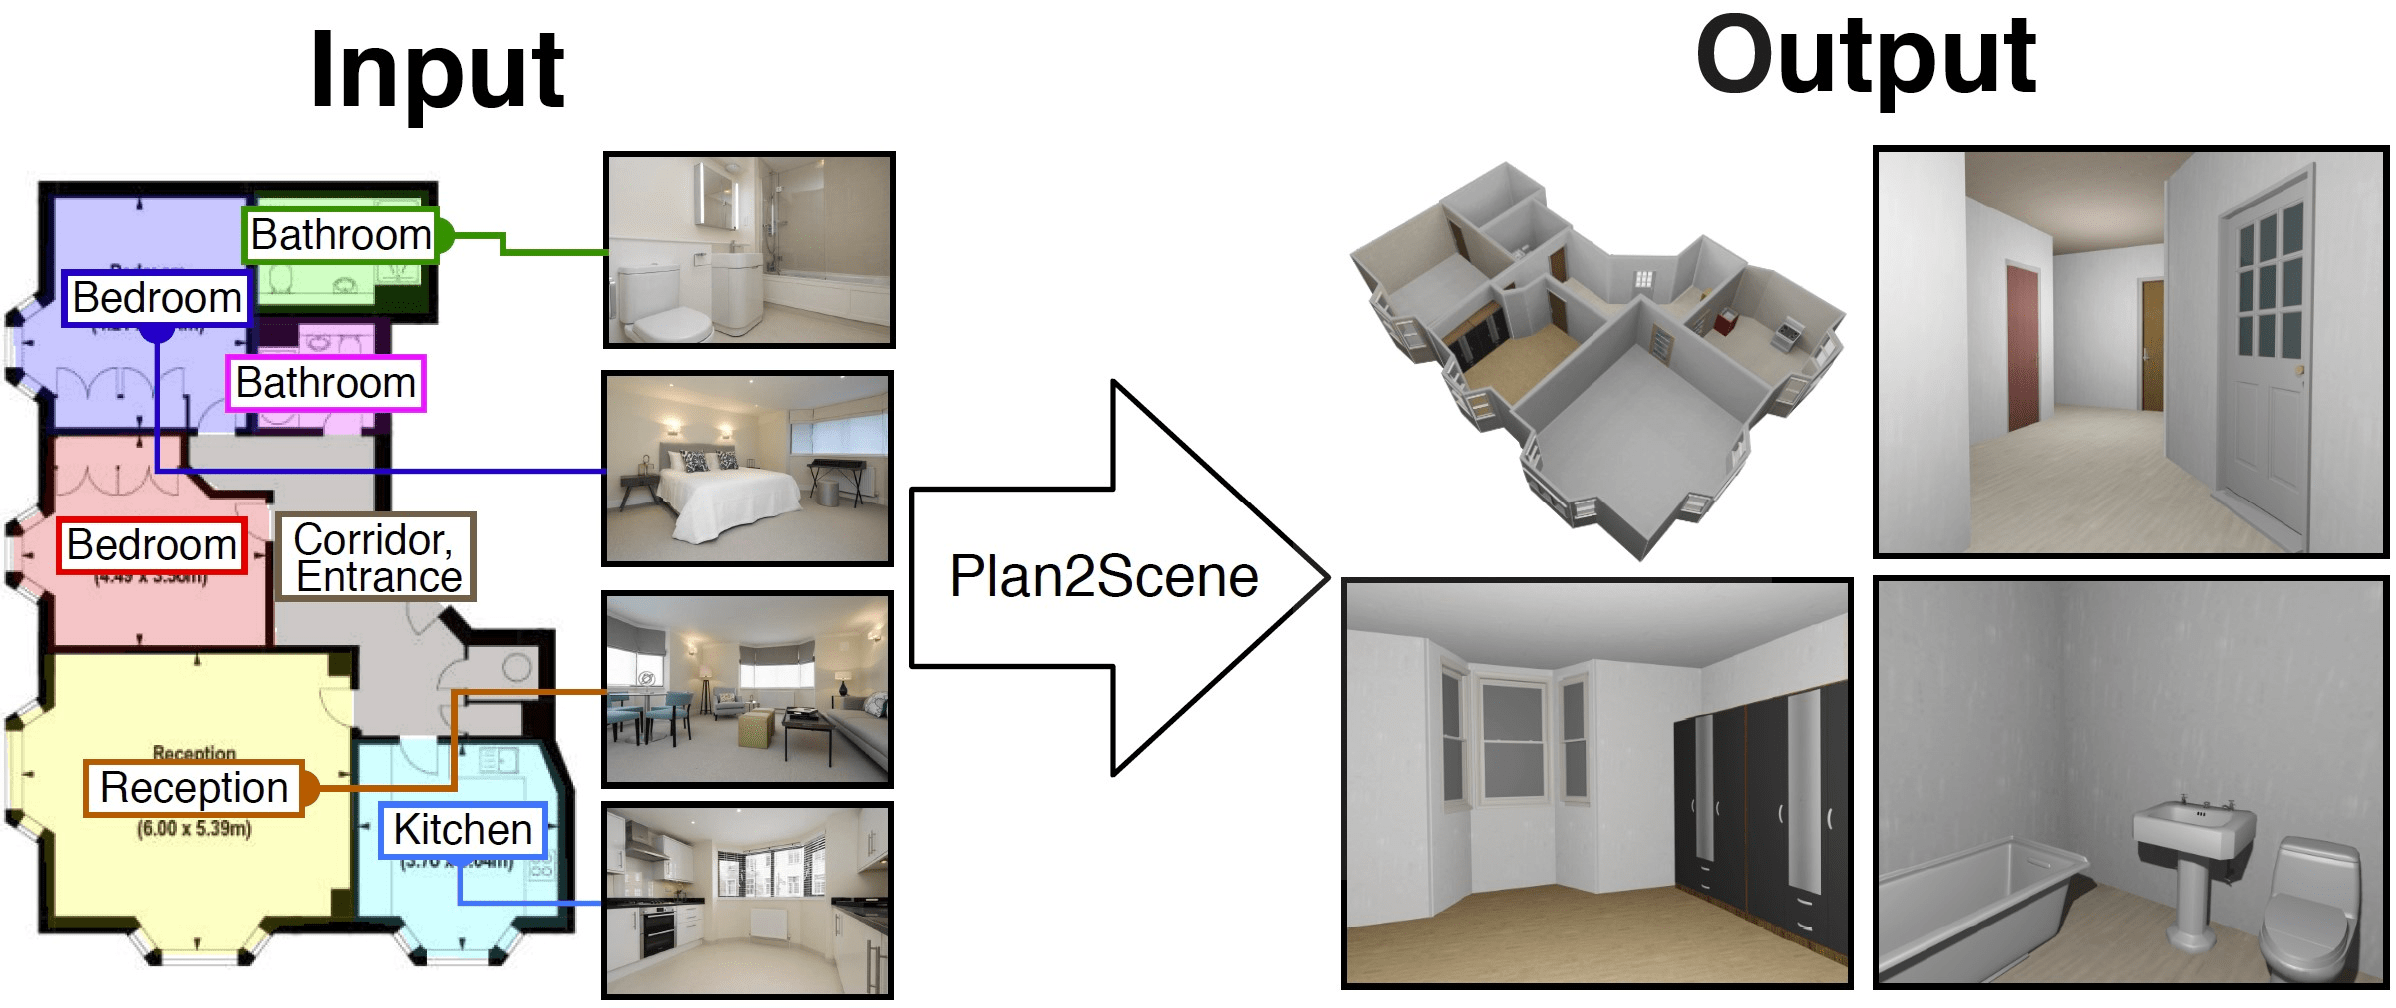 Plan2Scene: Converting Floorplans to 3D Scenes